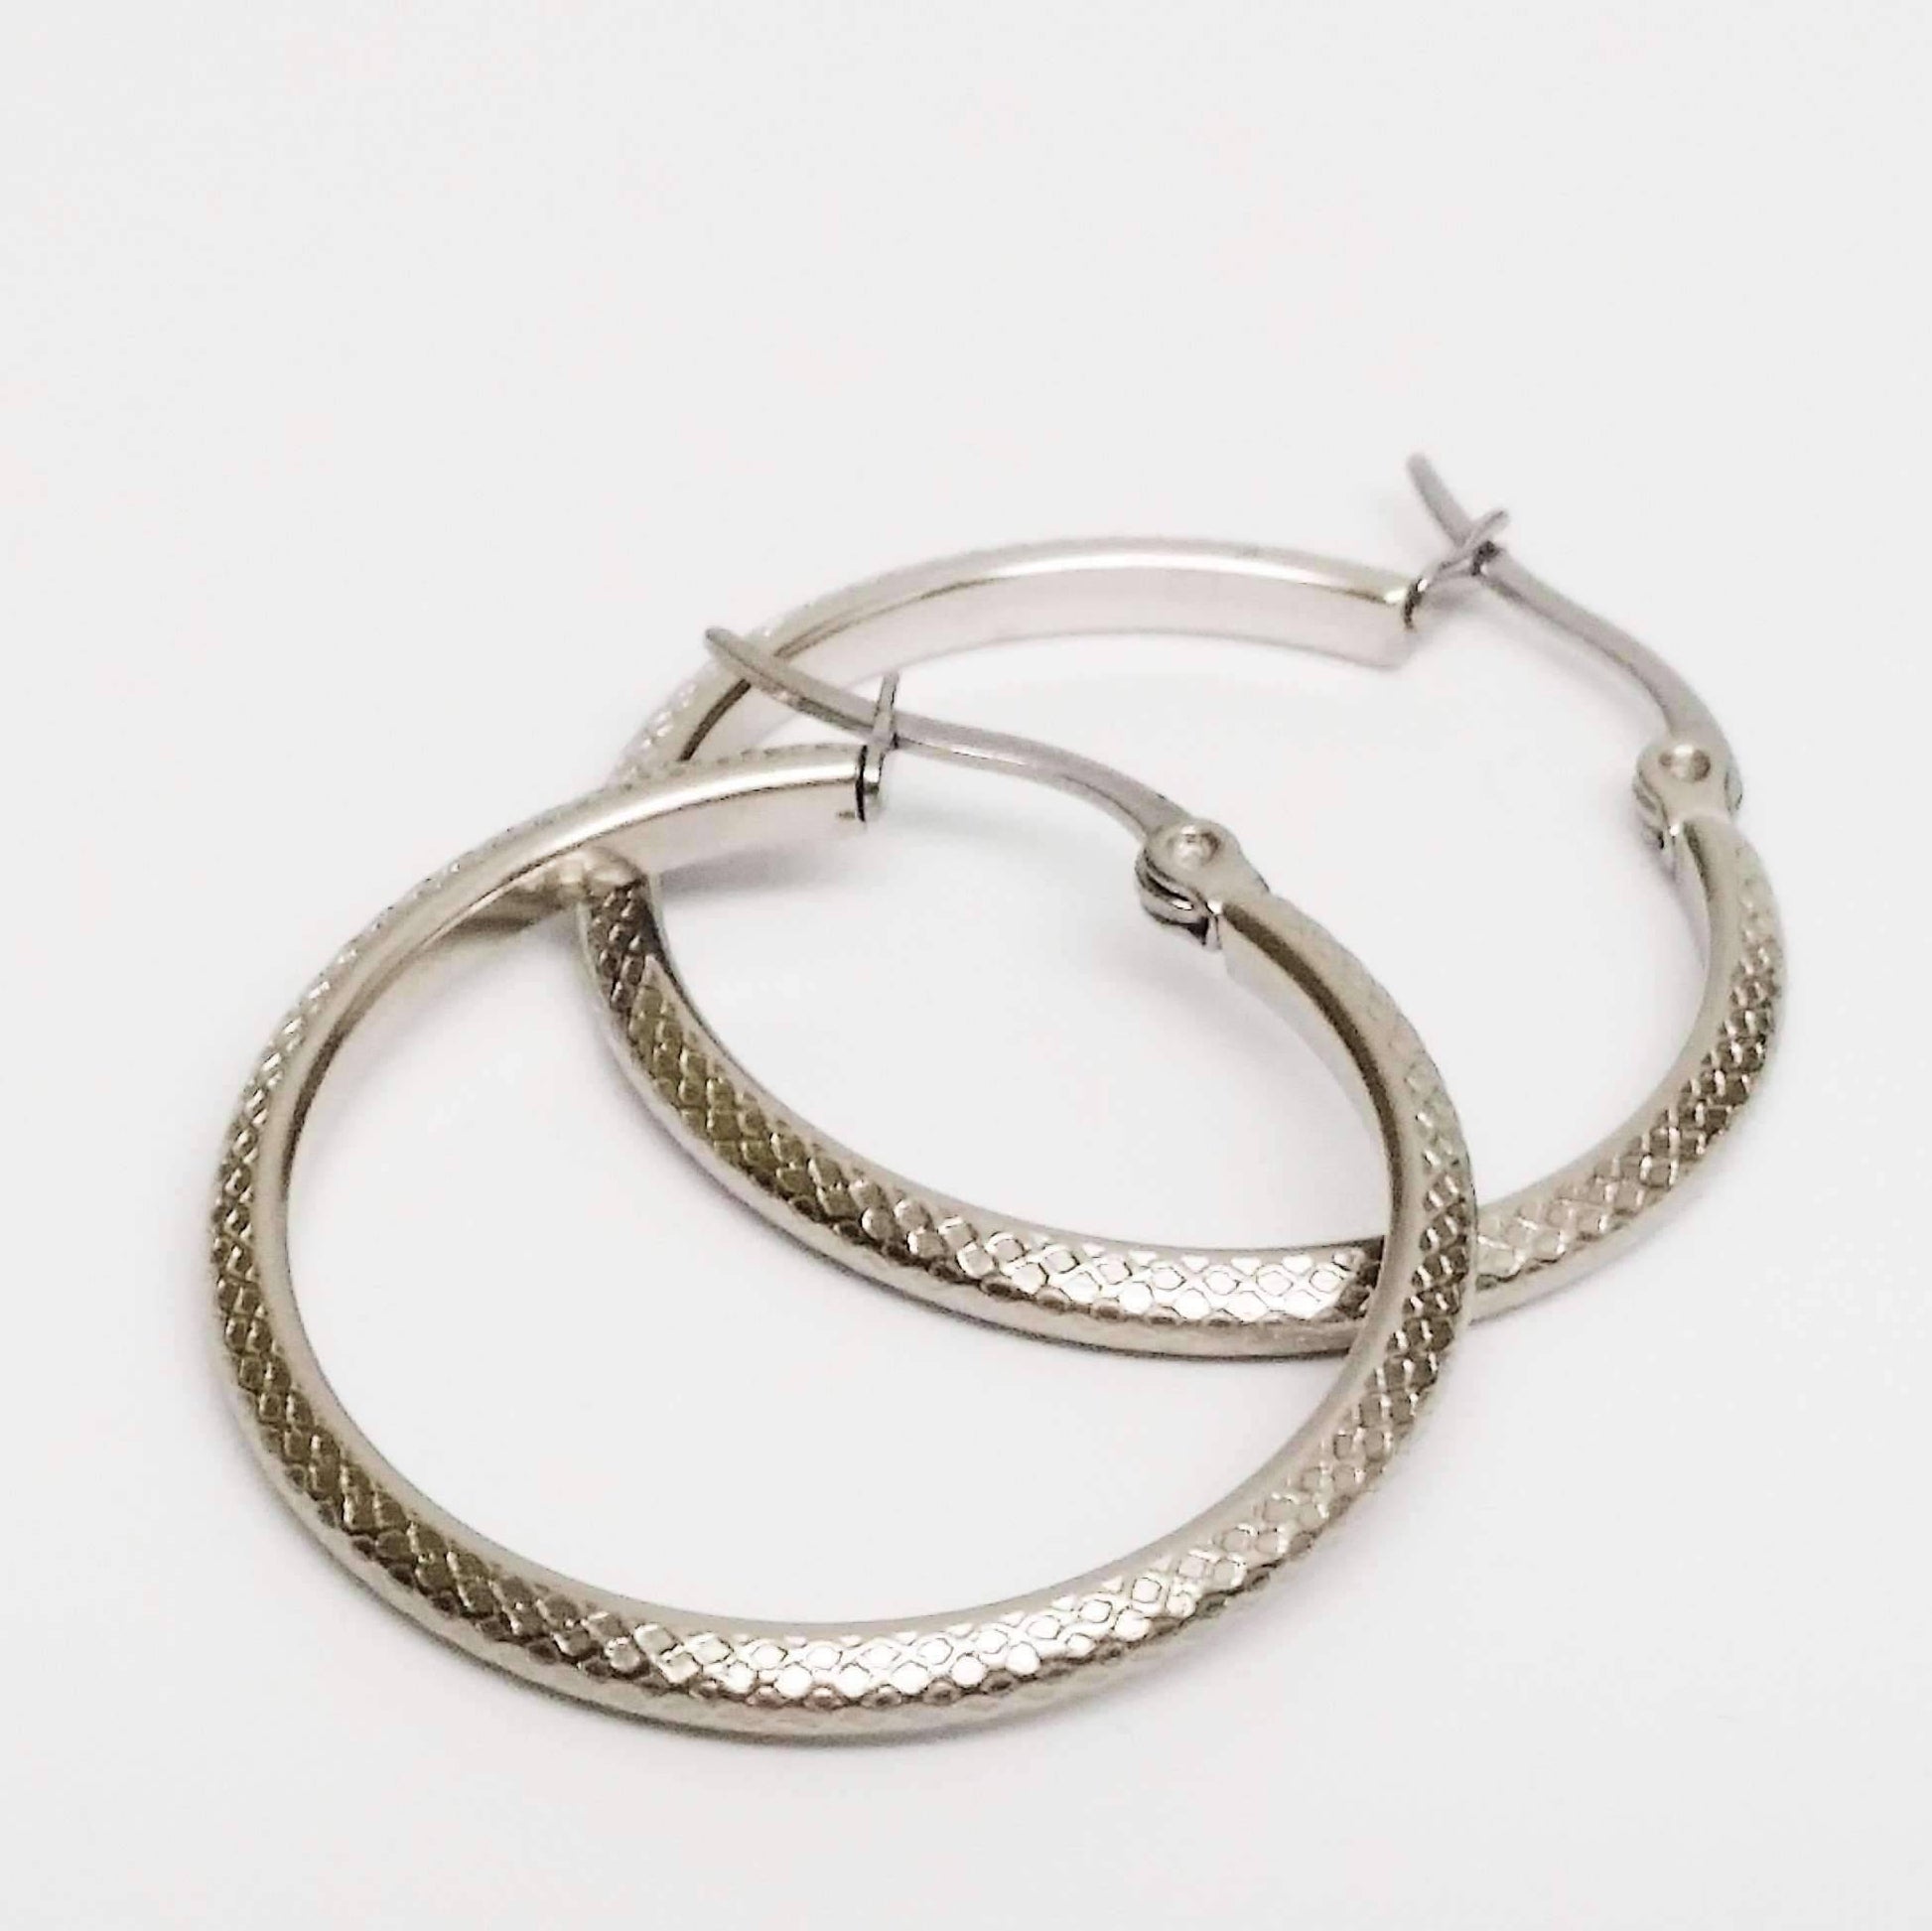 Feshionn IOBI Earrings Art Nouveau Etched Stainless Steel Hoop Earrings